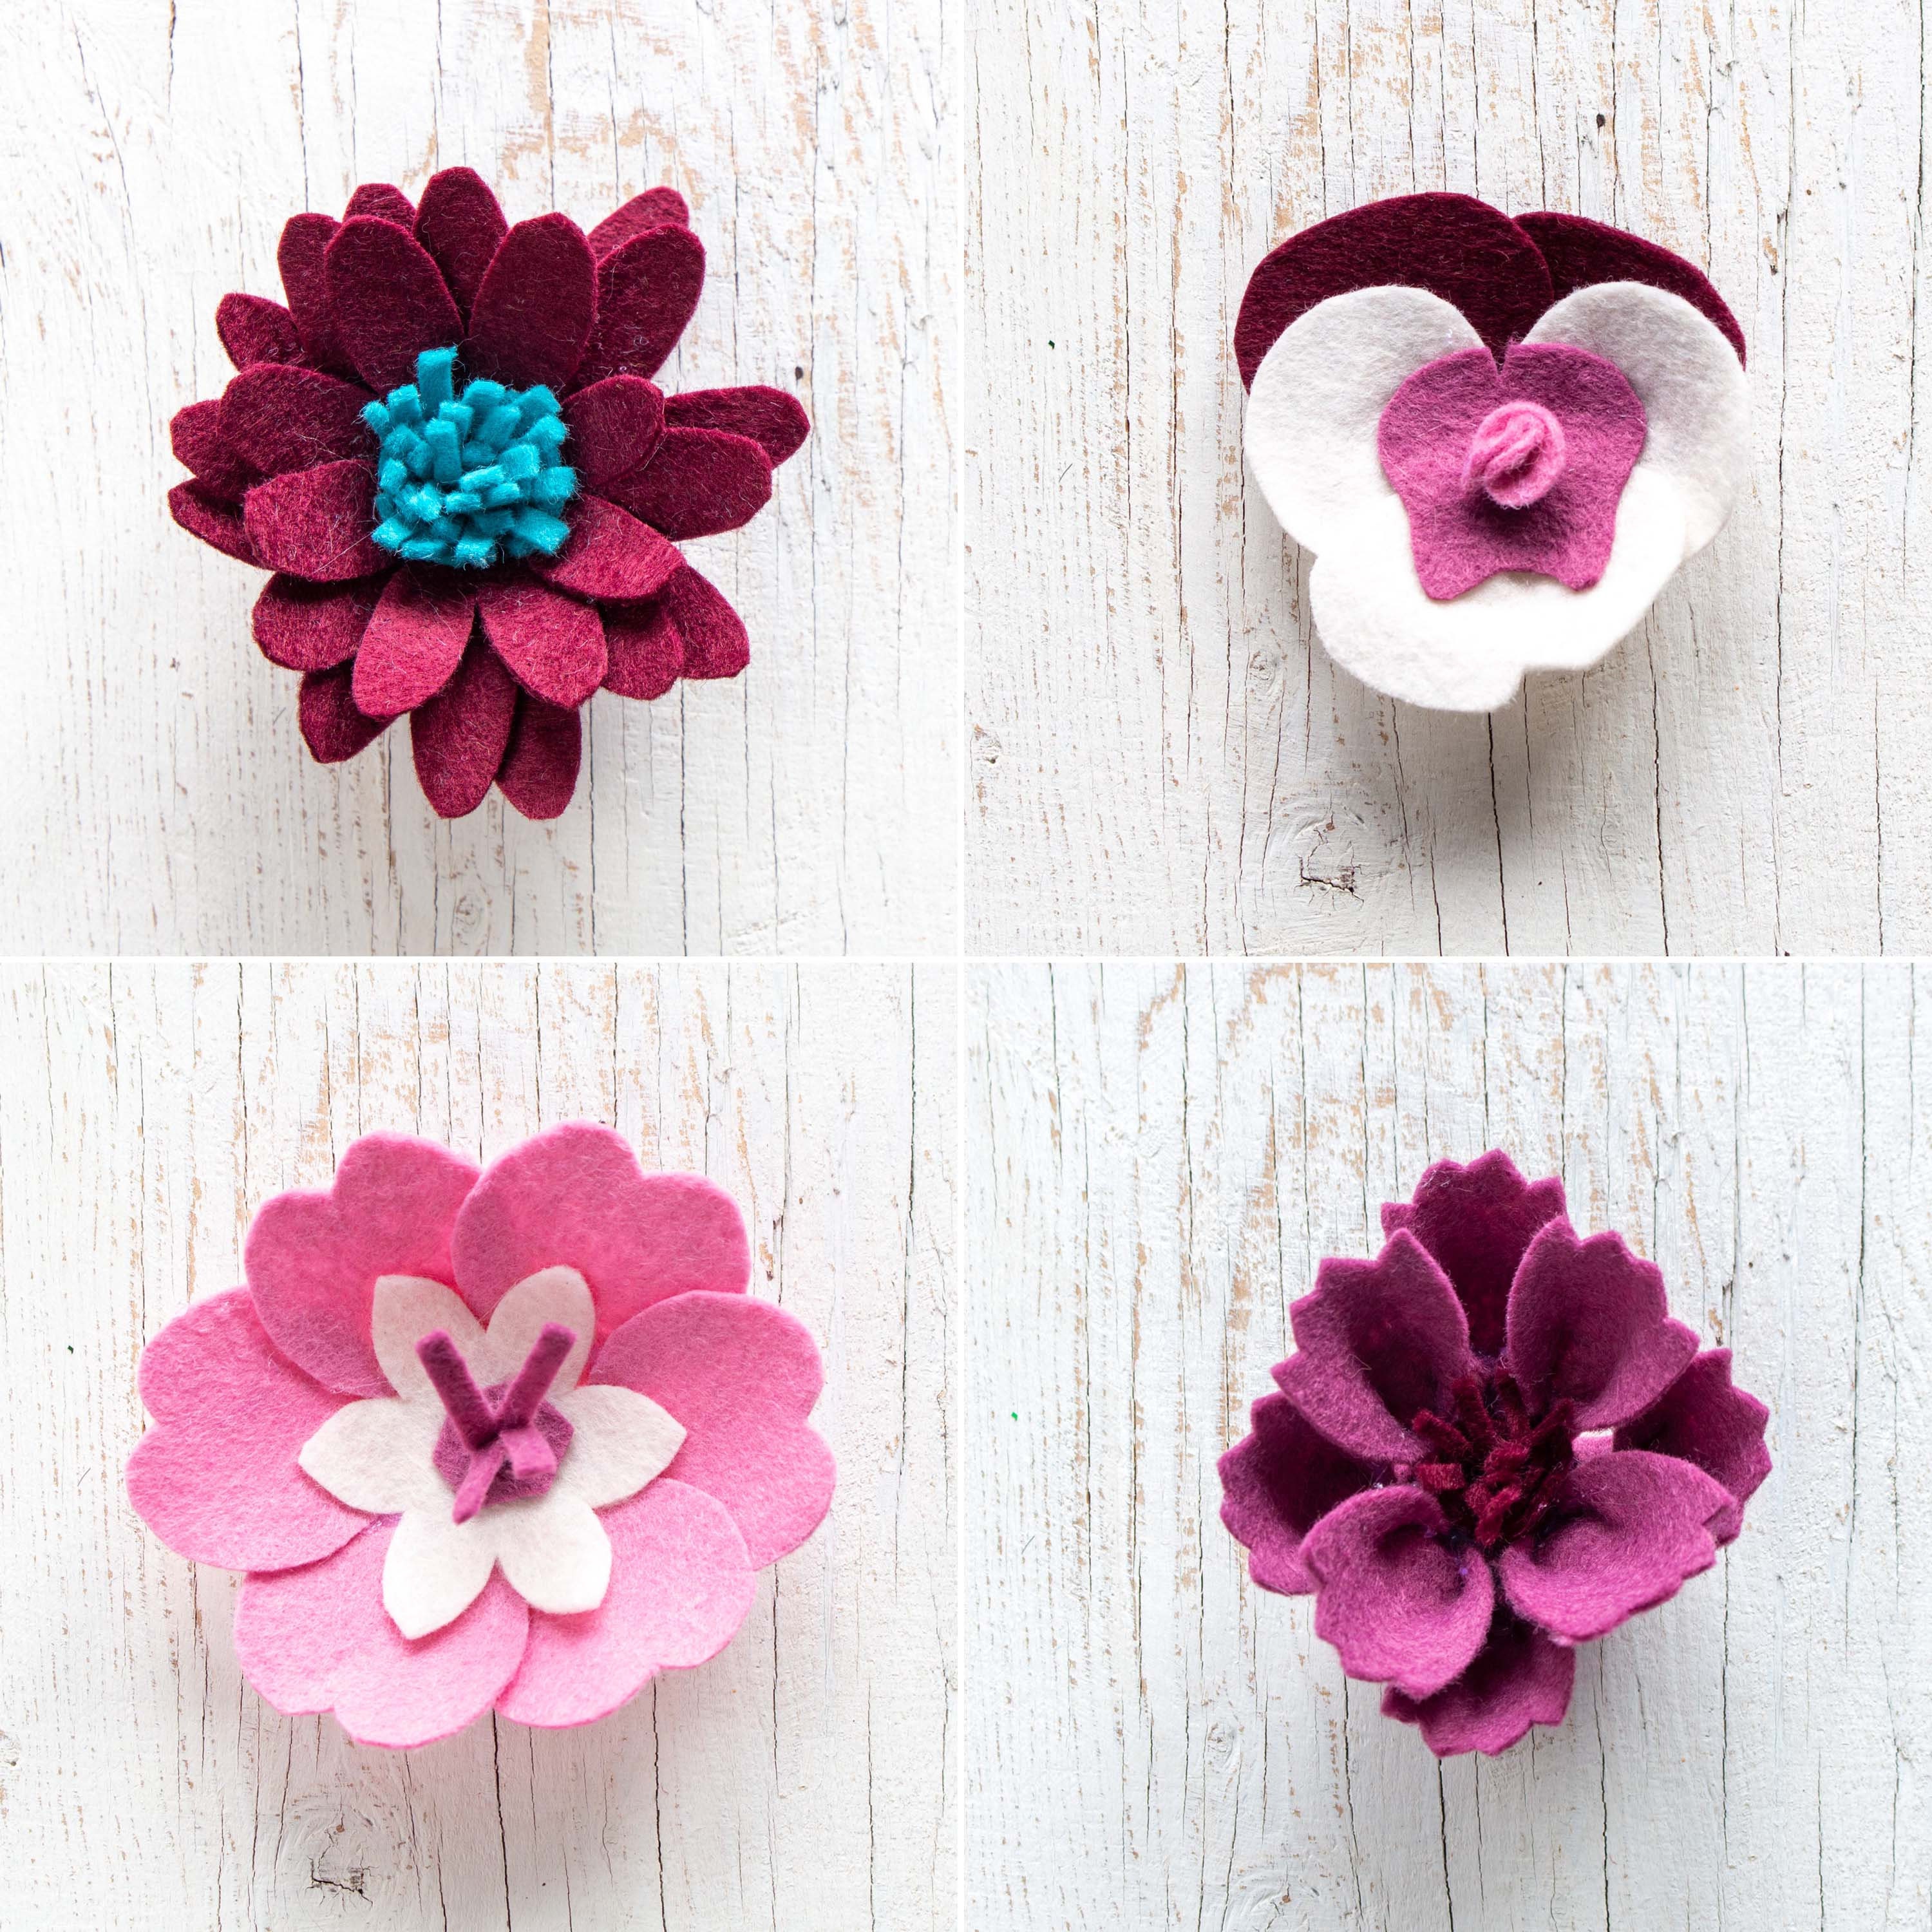 Simplicity Felt Flowers with Cricut Maker - Eclectic Momsense